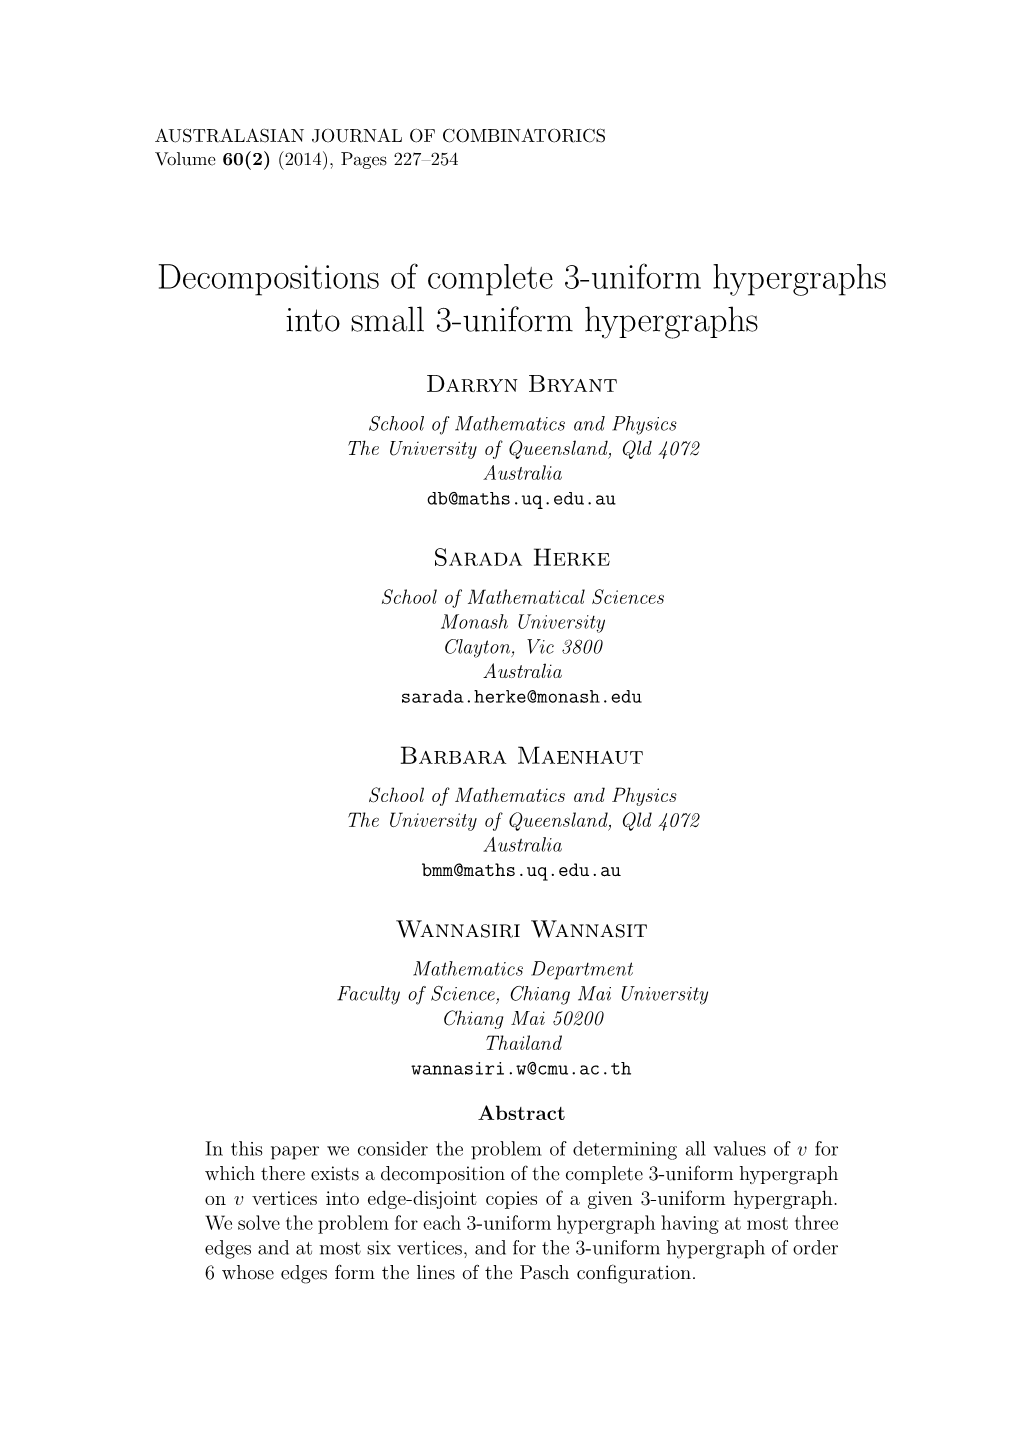 Decompositions of Complete 3-Uniform Hypergraphs Into Small 3-Uniform Hypergraphs